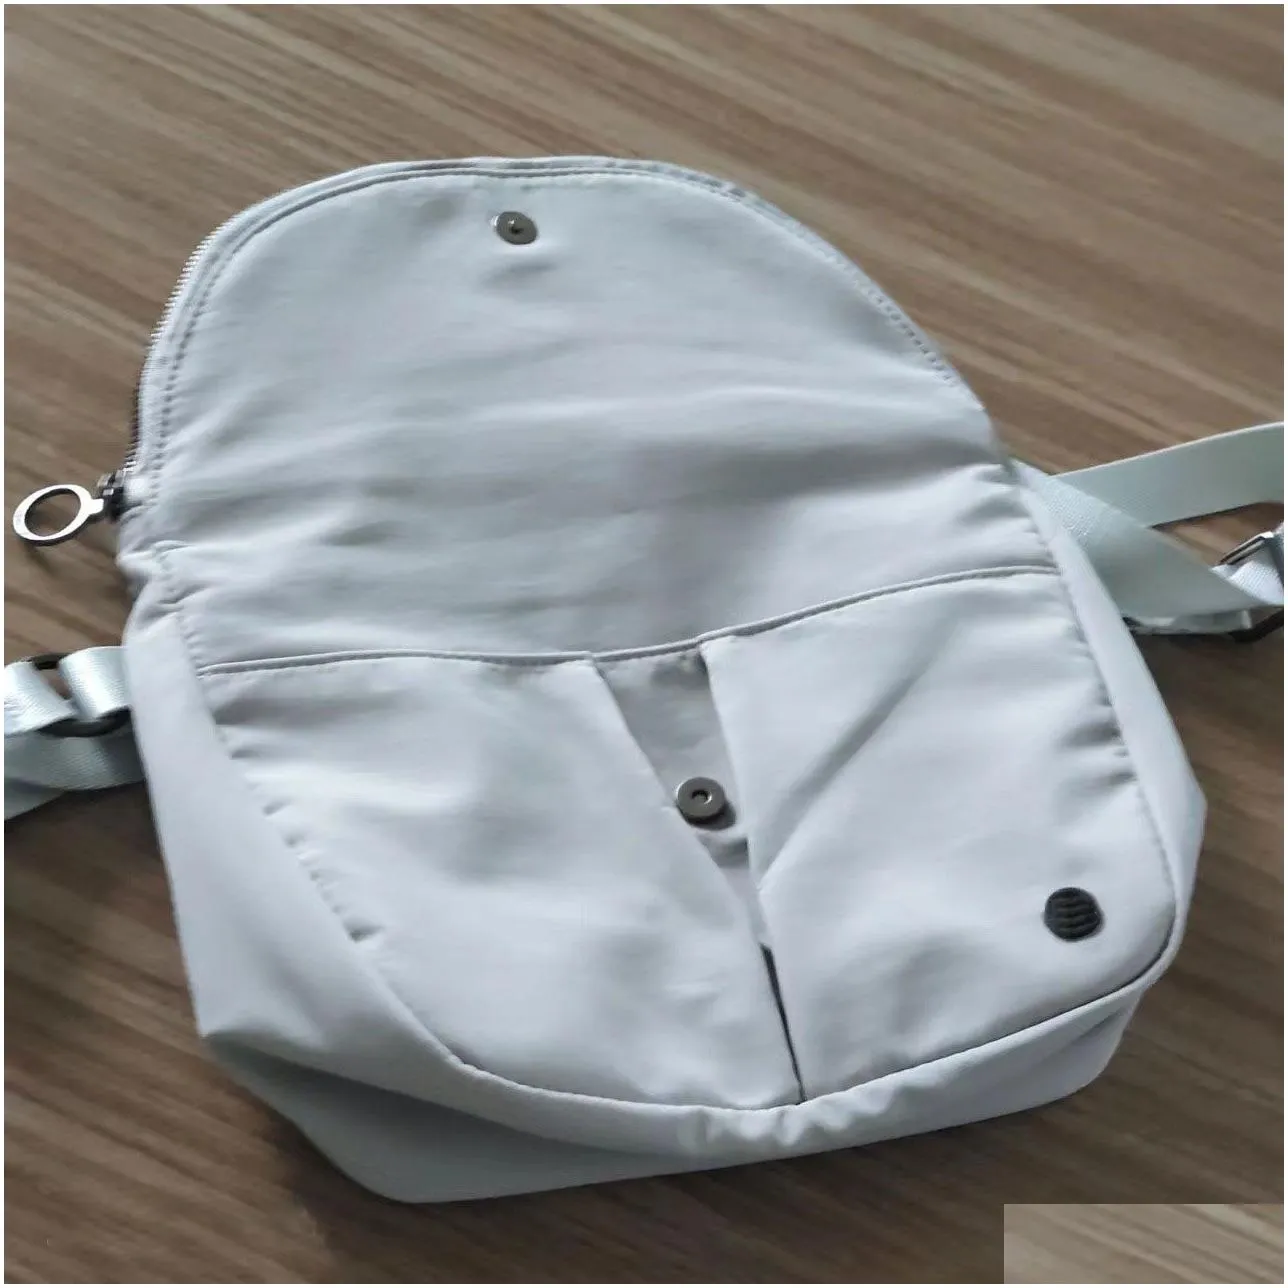 ll festival bag women shoulder bag have adjustable strap yoga bags waterrepellent zipper outdoor crossbody